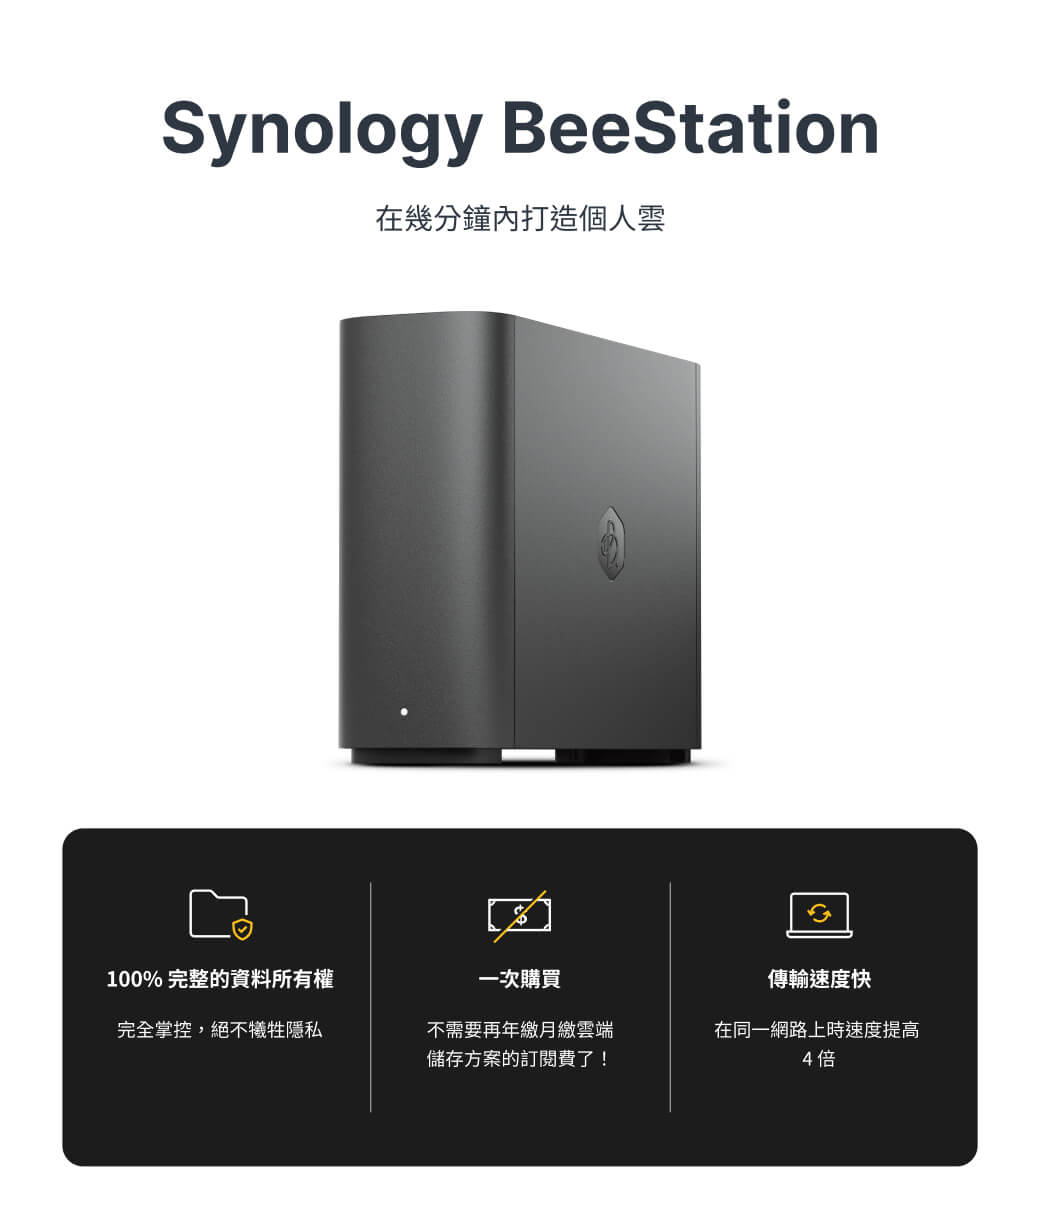 Synology 推出史上最簡單的個人私人雲 BeeStation，省去 NAS 架設知識 & 時間成本，也比訂閱 iCloud、Google Drive 還划算。